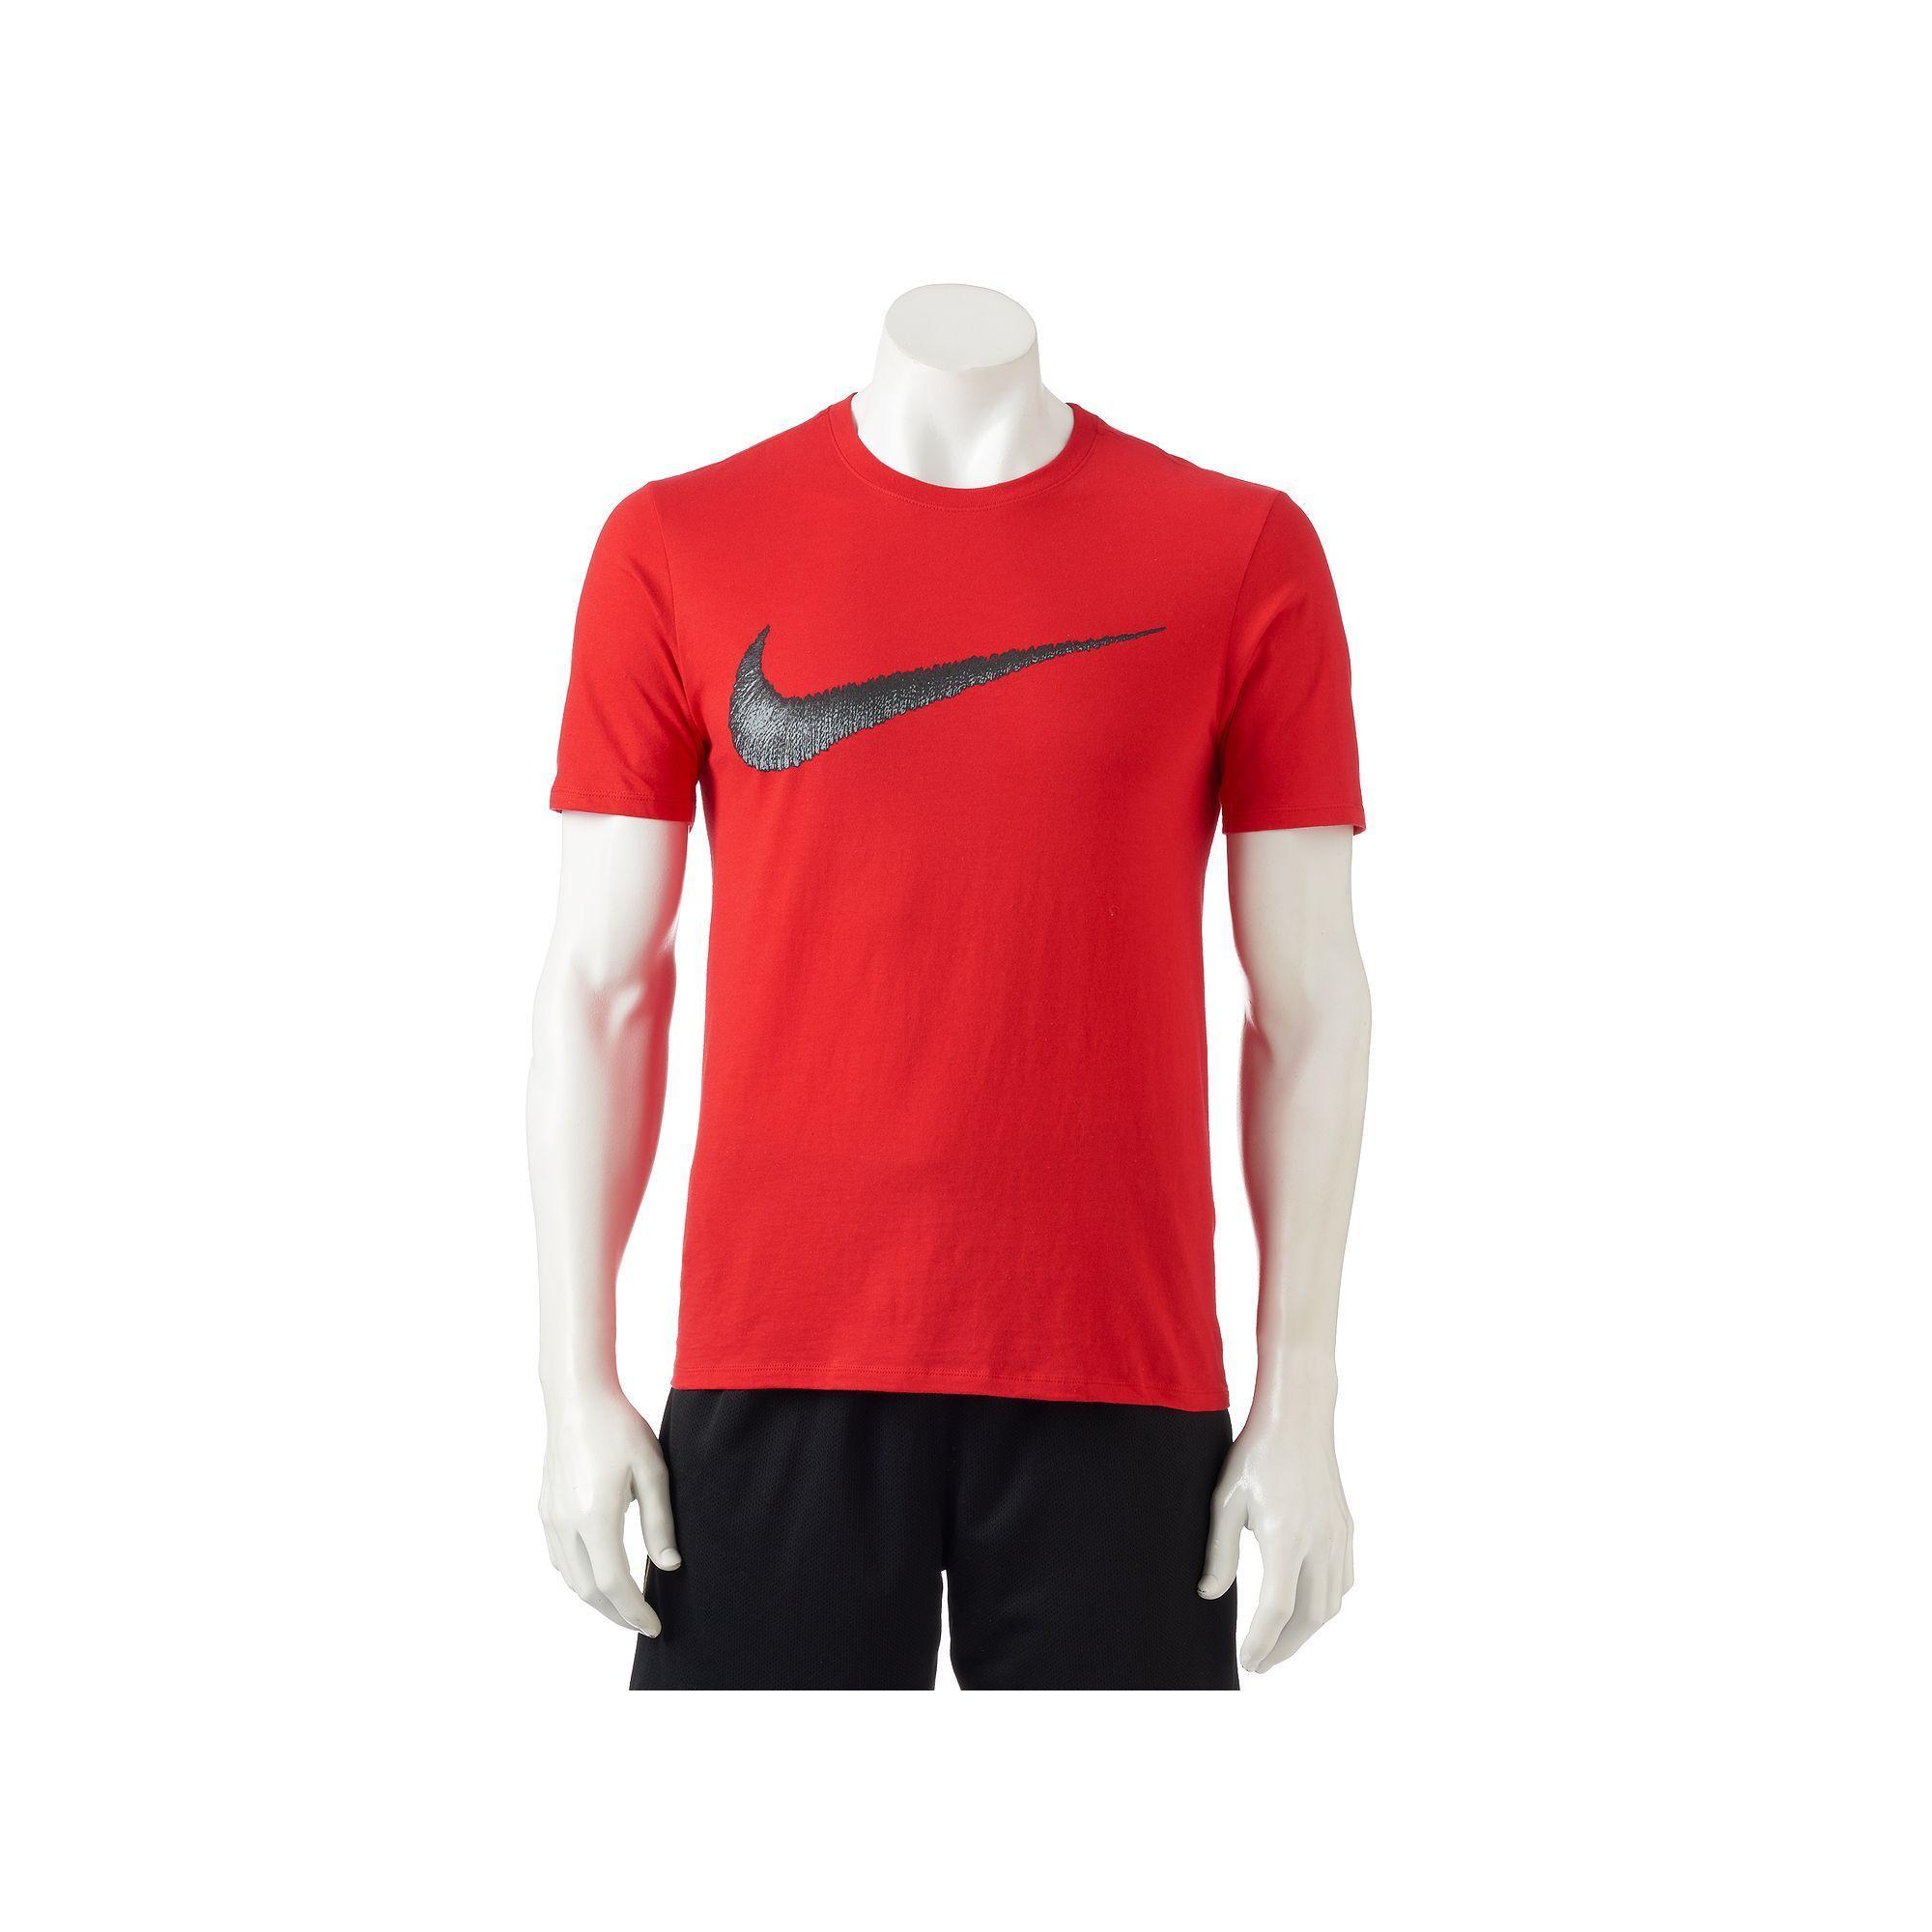 Red Nike Swoosh Logo - Men's Nike Swoosh Logo Tee, Size: Medium, Red | Products | Pinterest ...